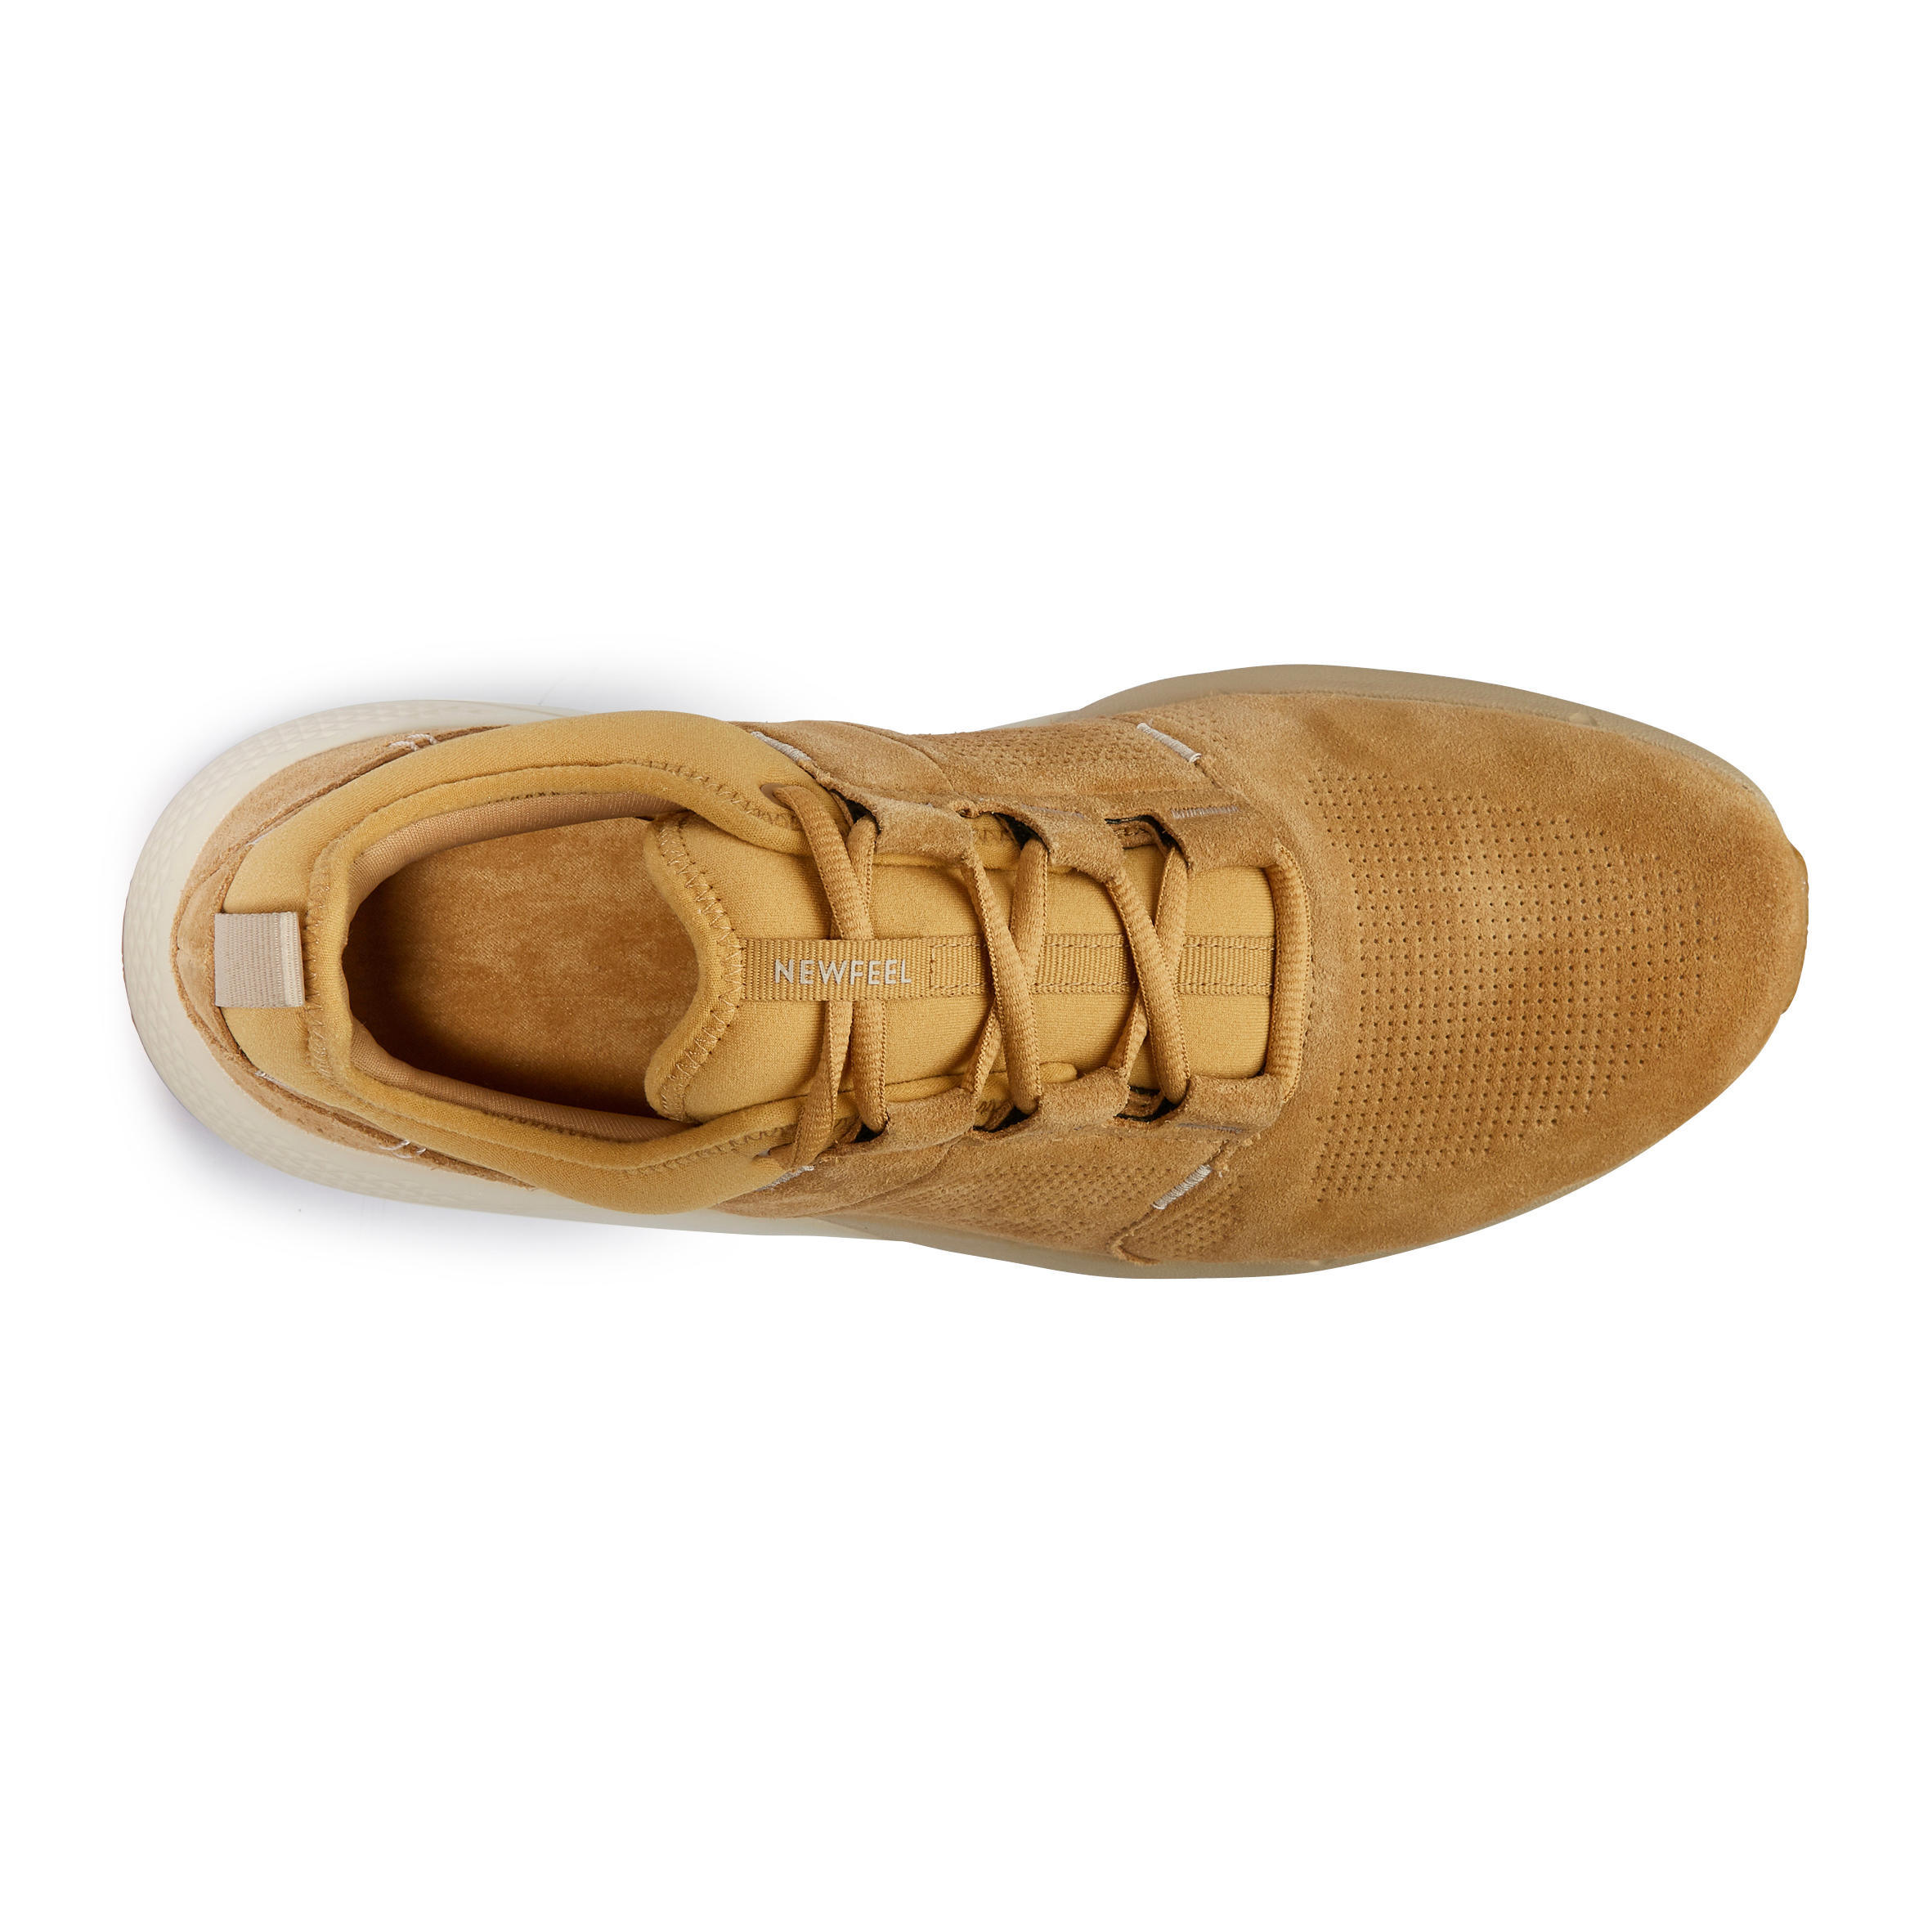 Actiwalk Comfort Leather Men's Urban Walking Shoes - Camel 40/43